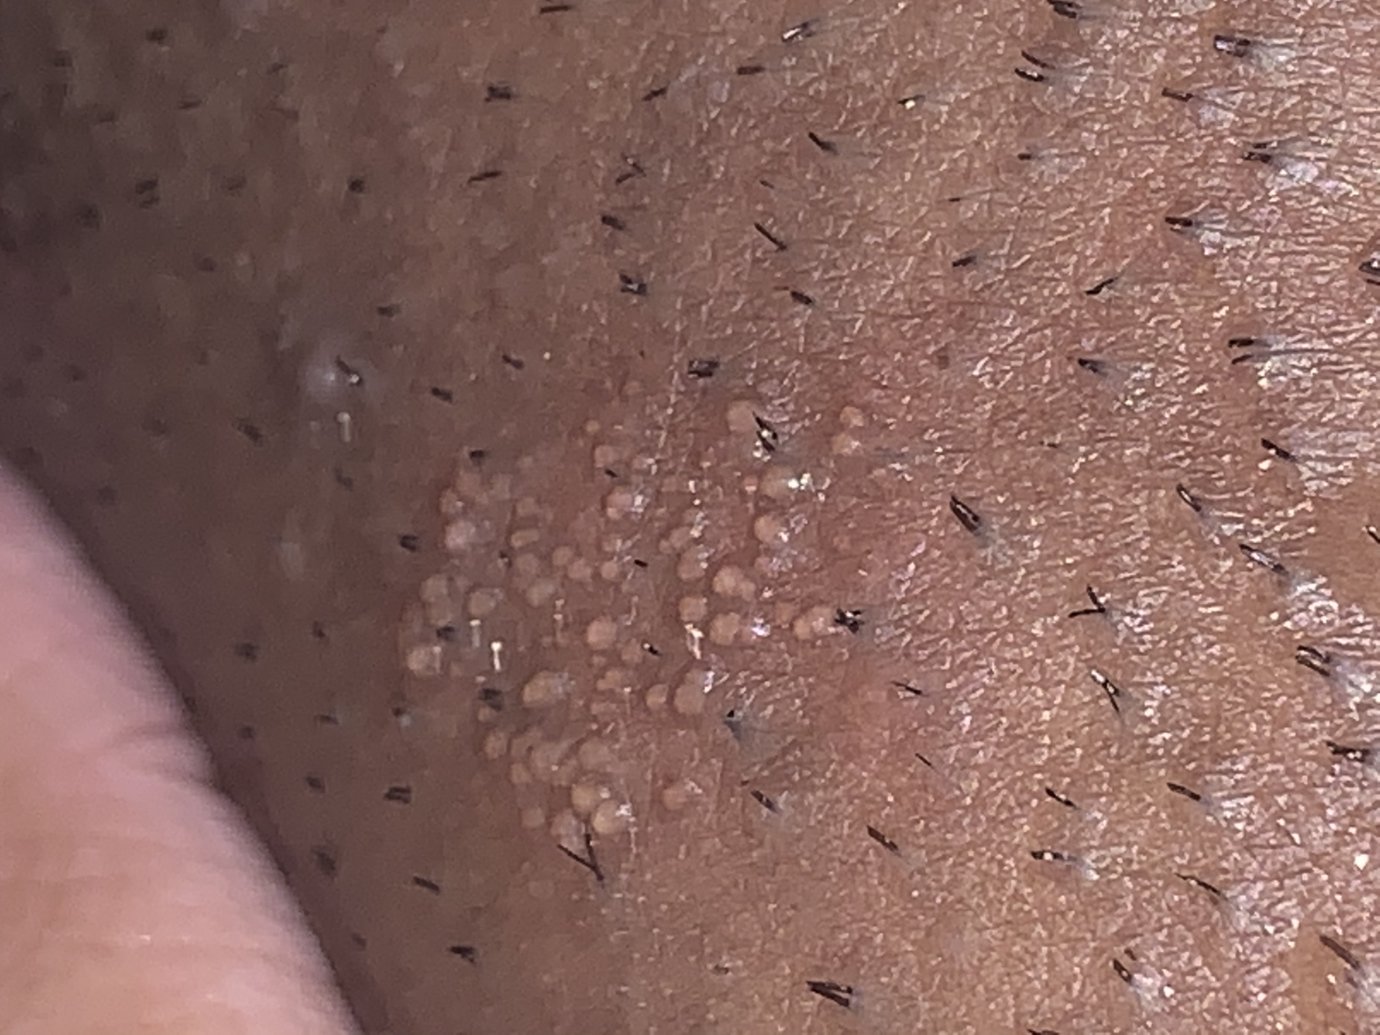 Please help . Is this herpes ??